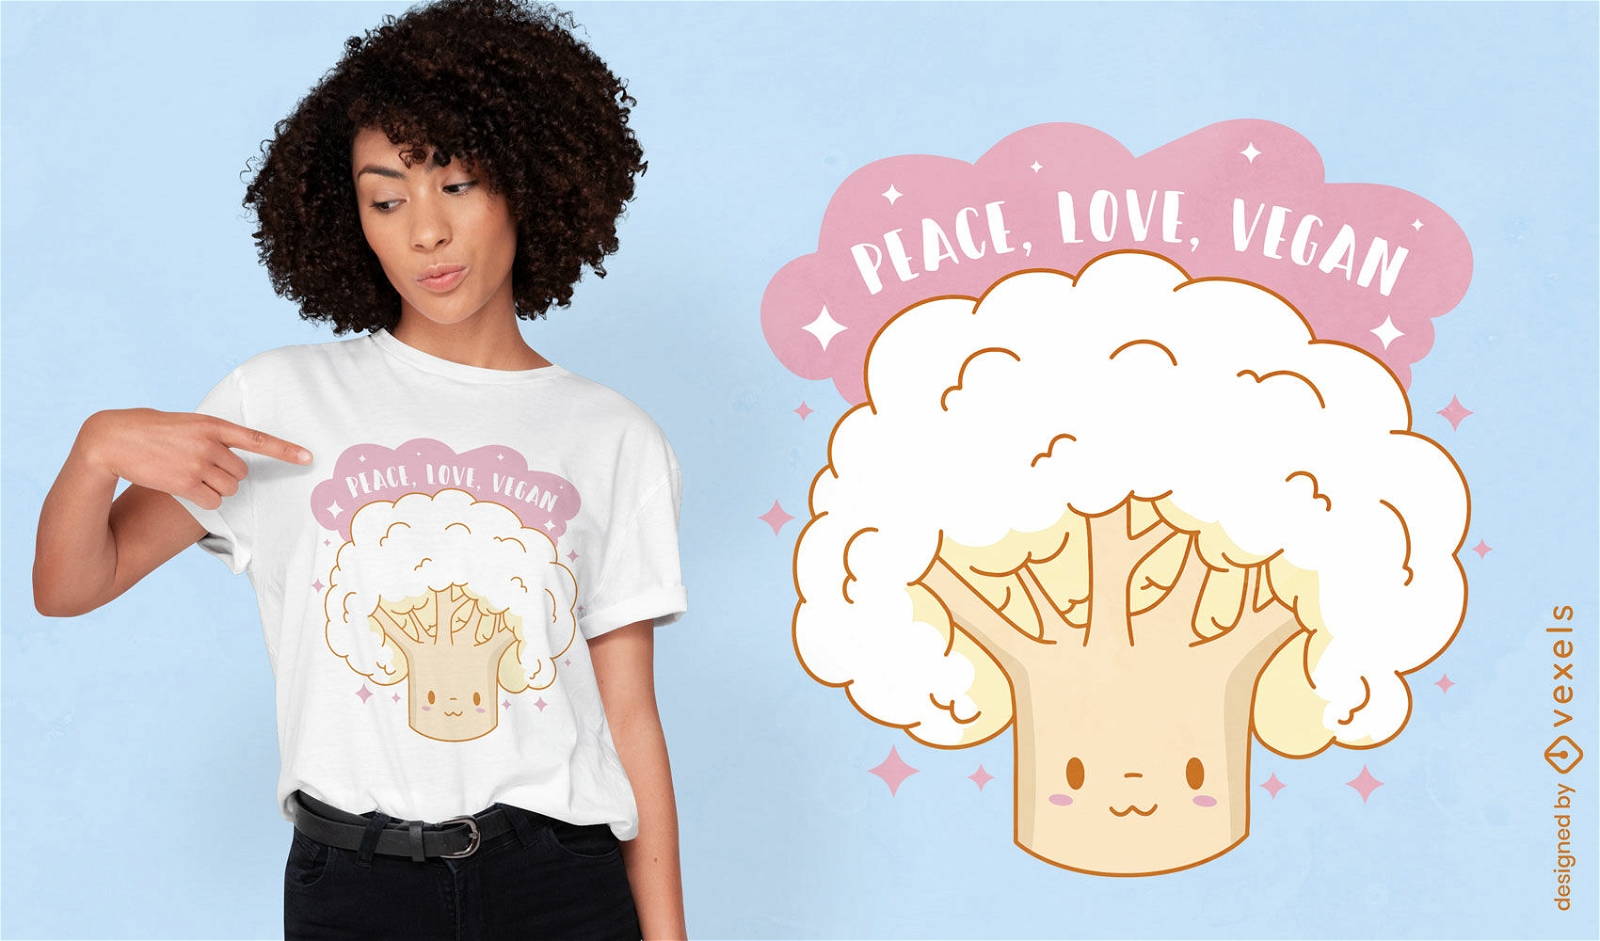 Cute vegan cauliflower character t-shirt design